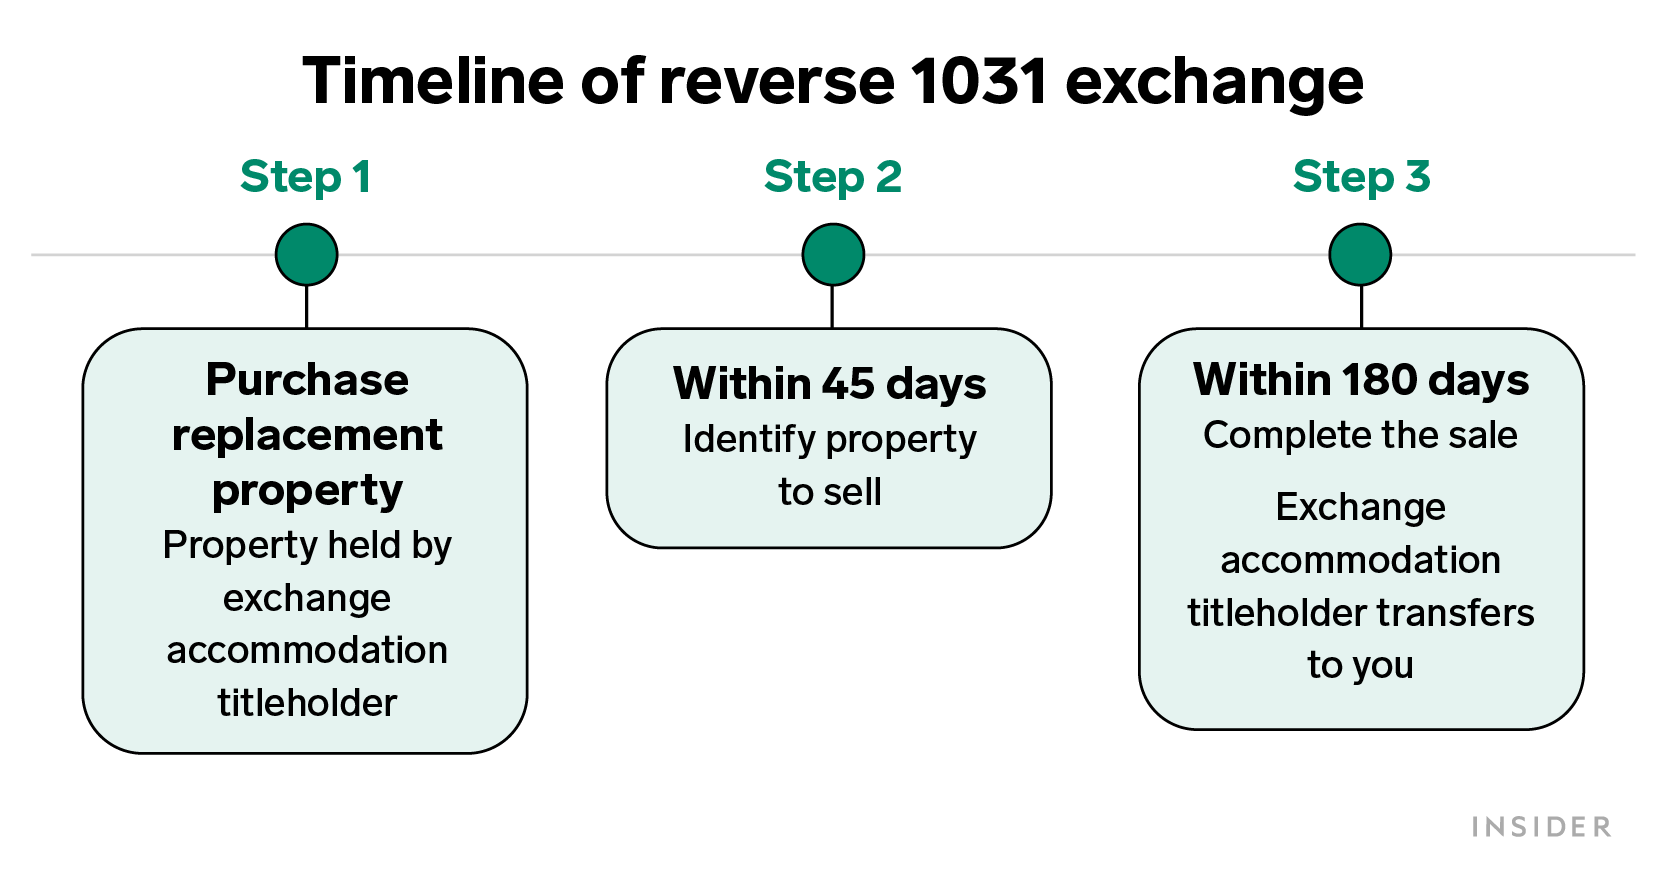 Timeline of reverse 1031 exchange